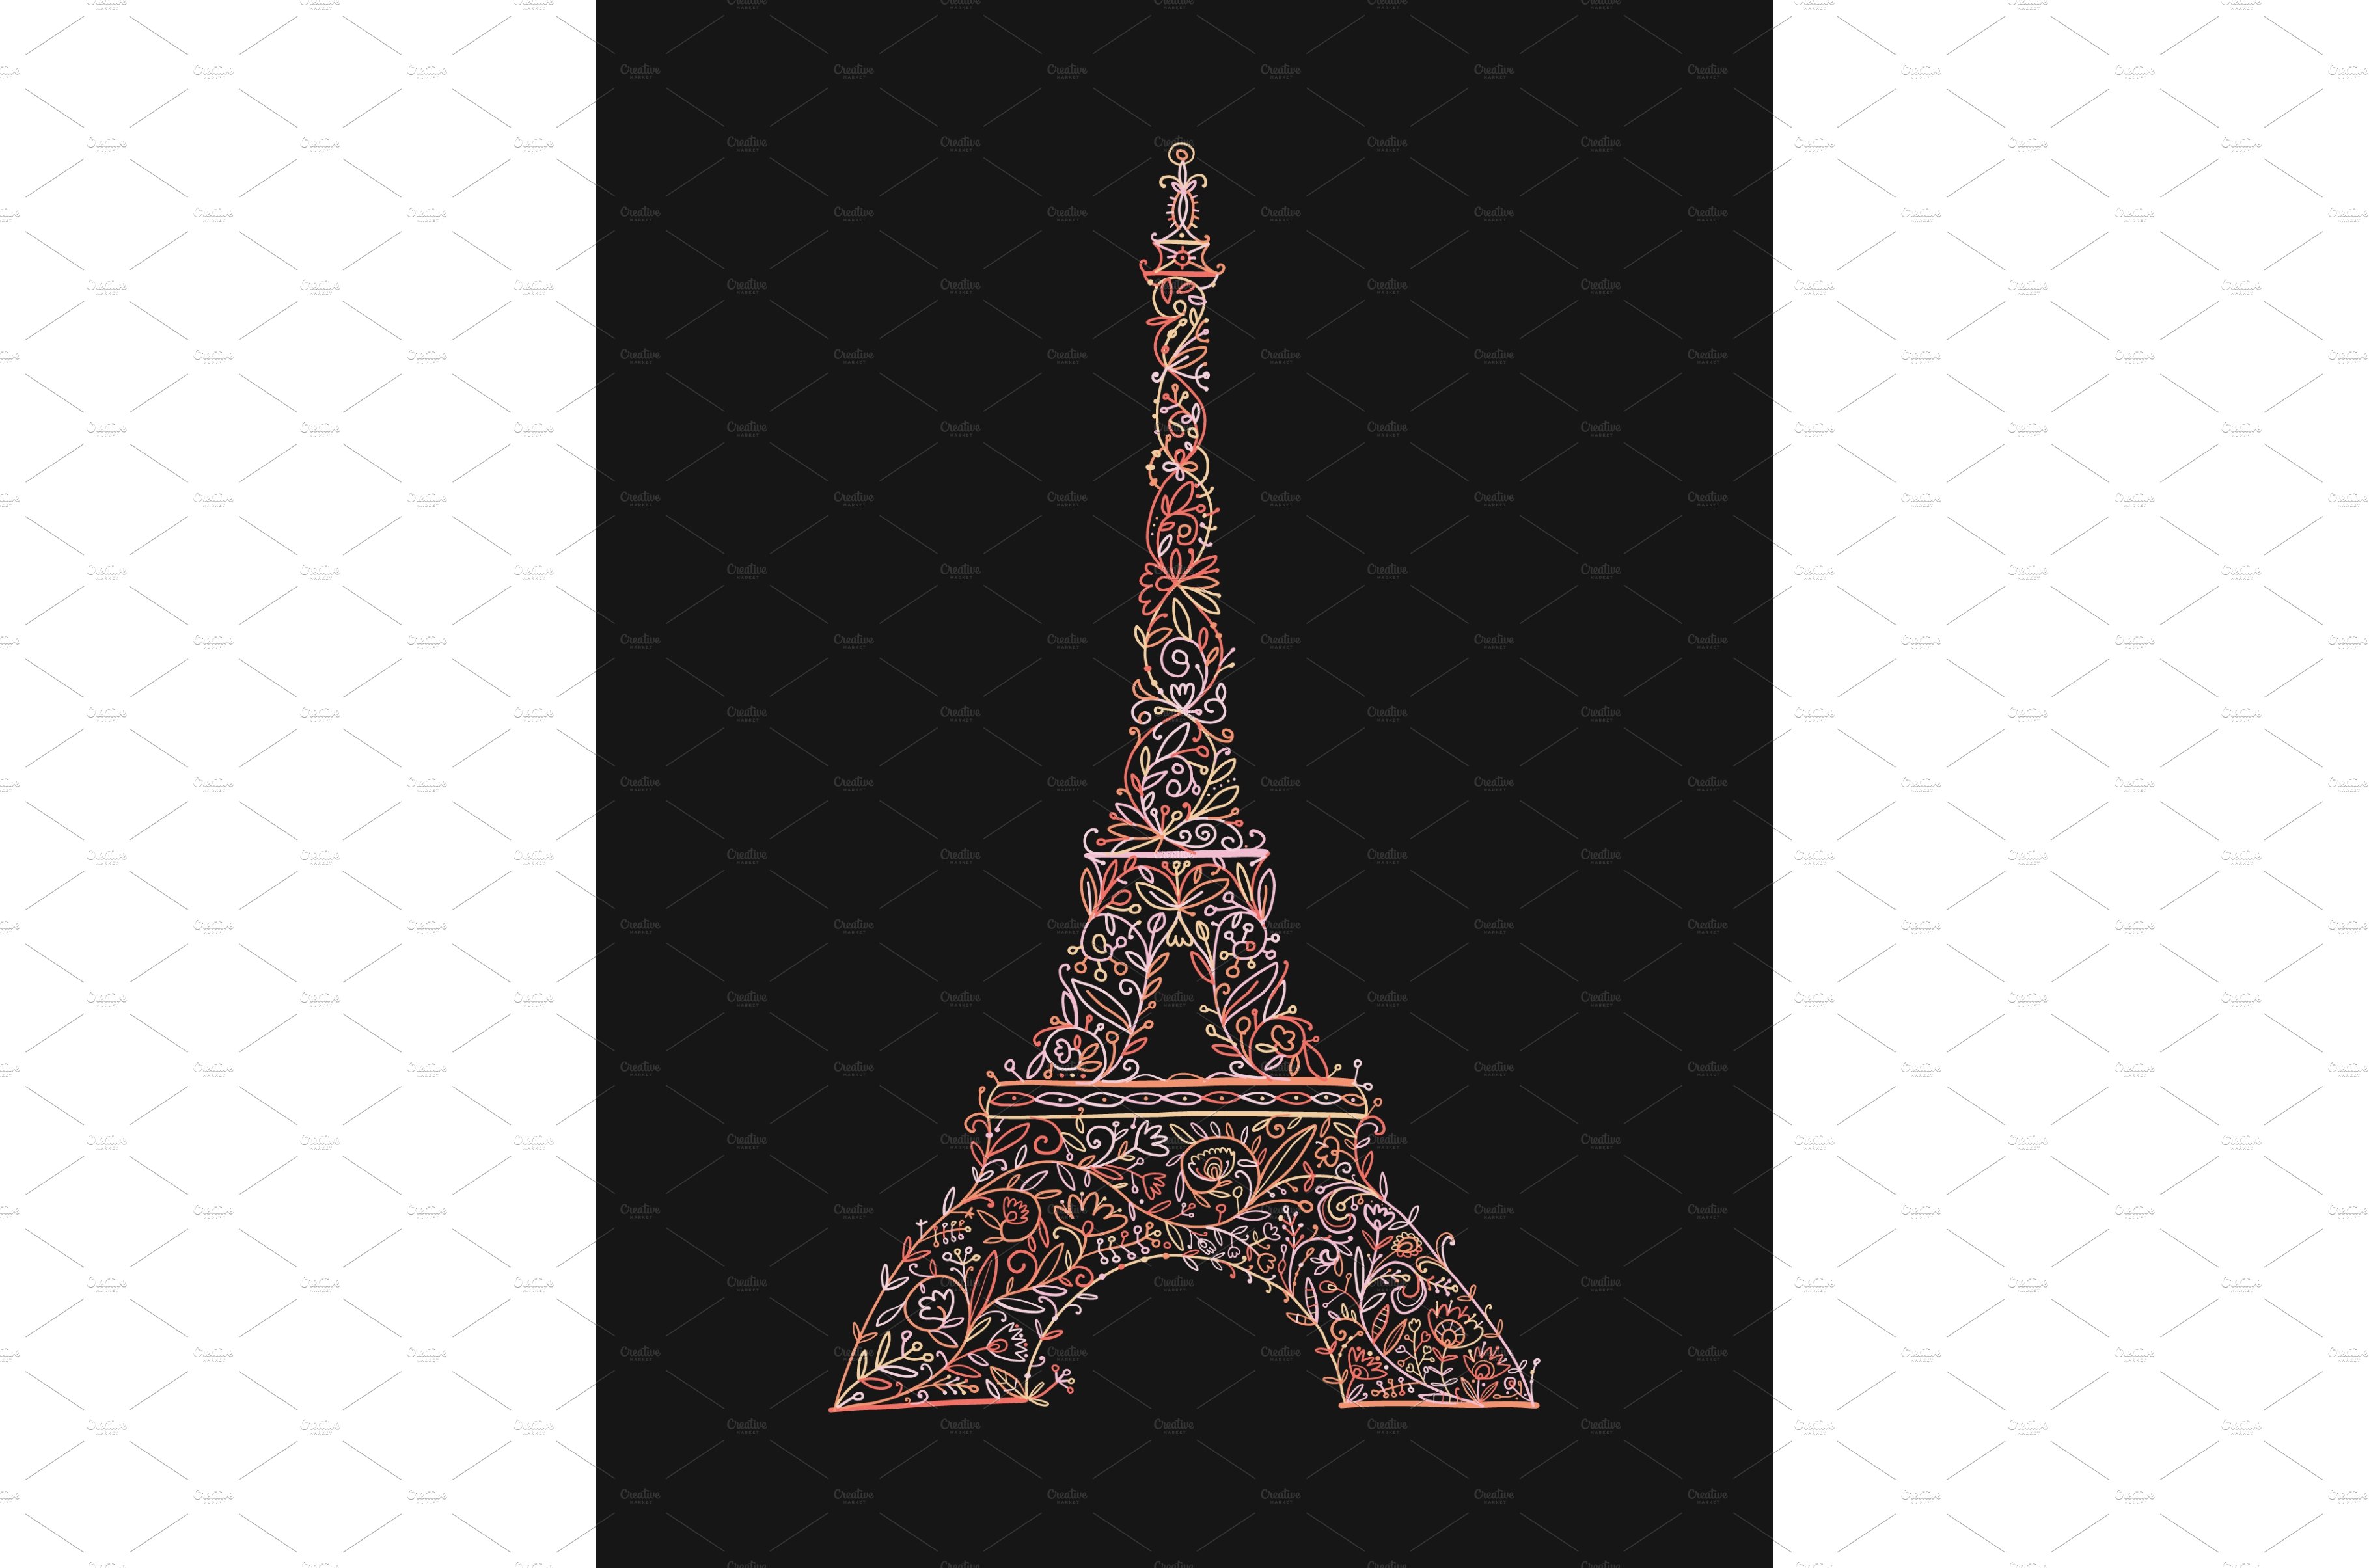 Stylized Eiffel Tower landmark in cover image.